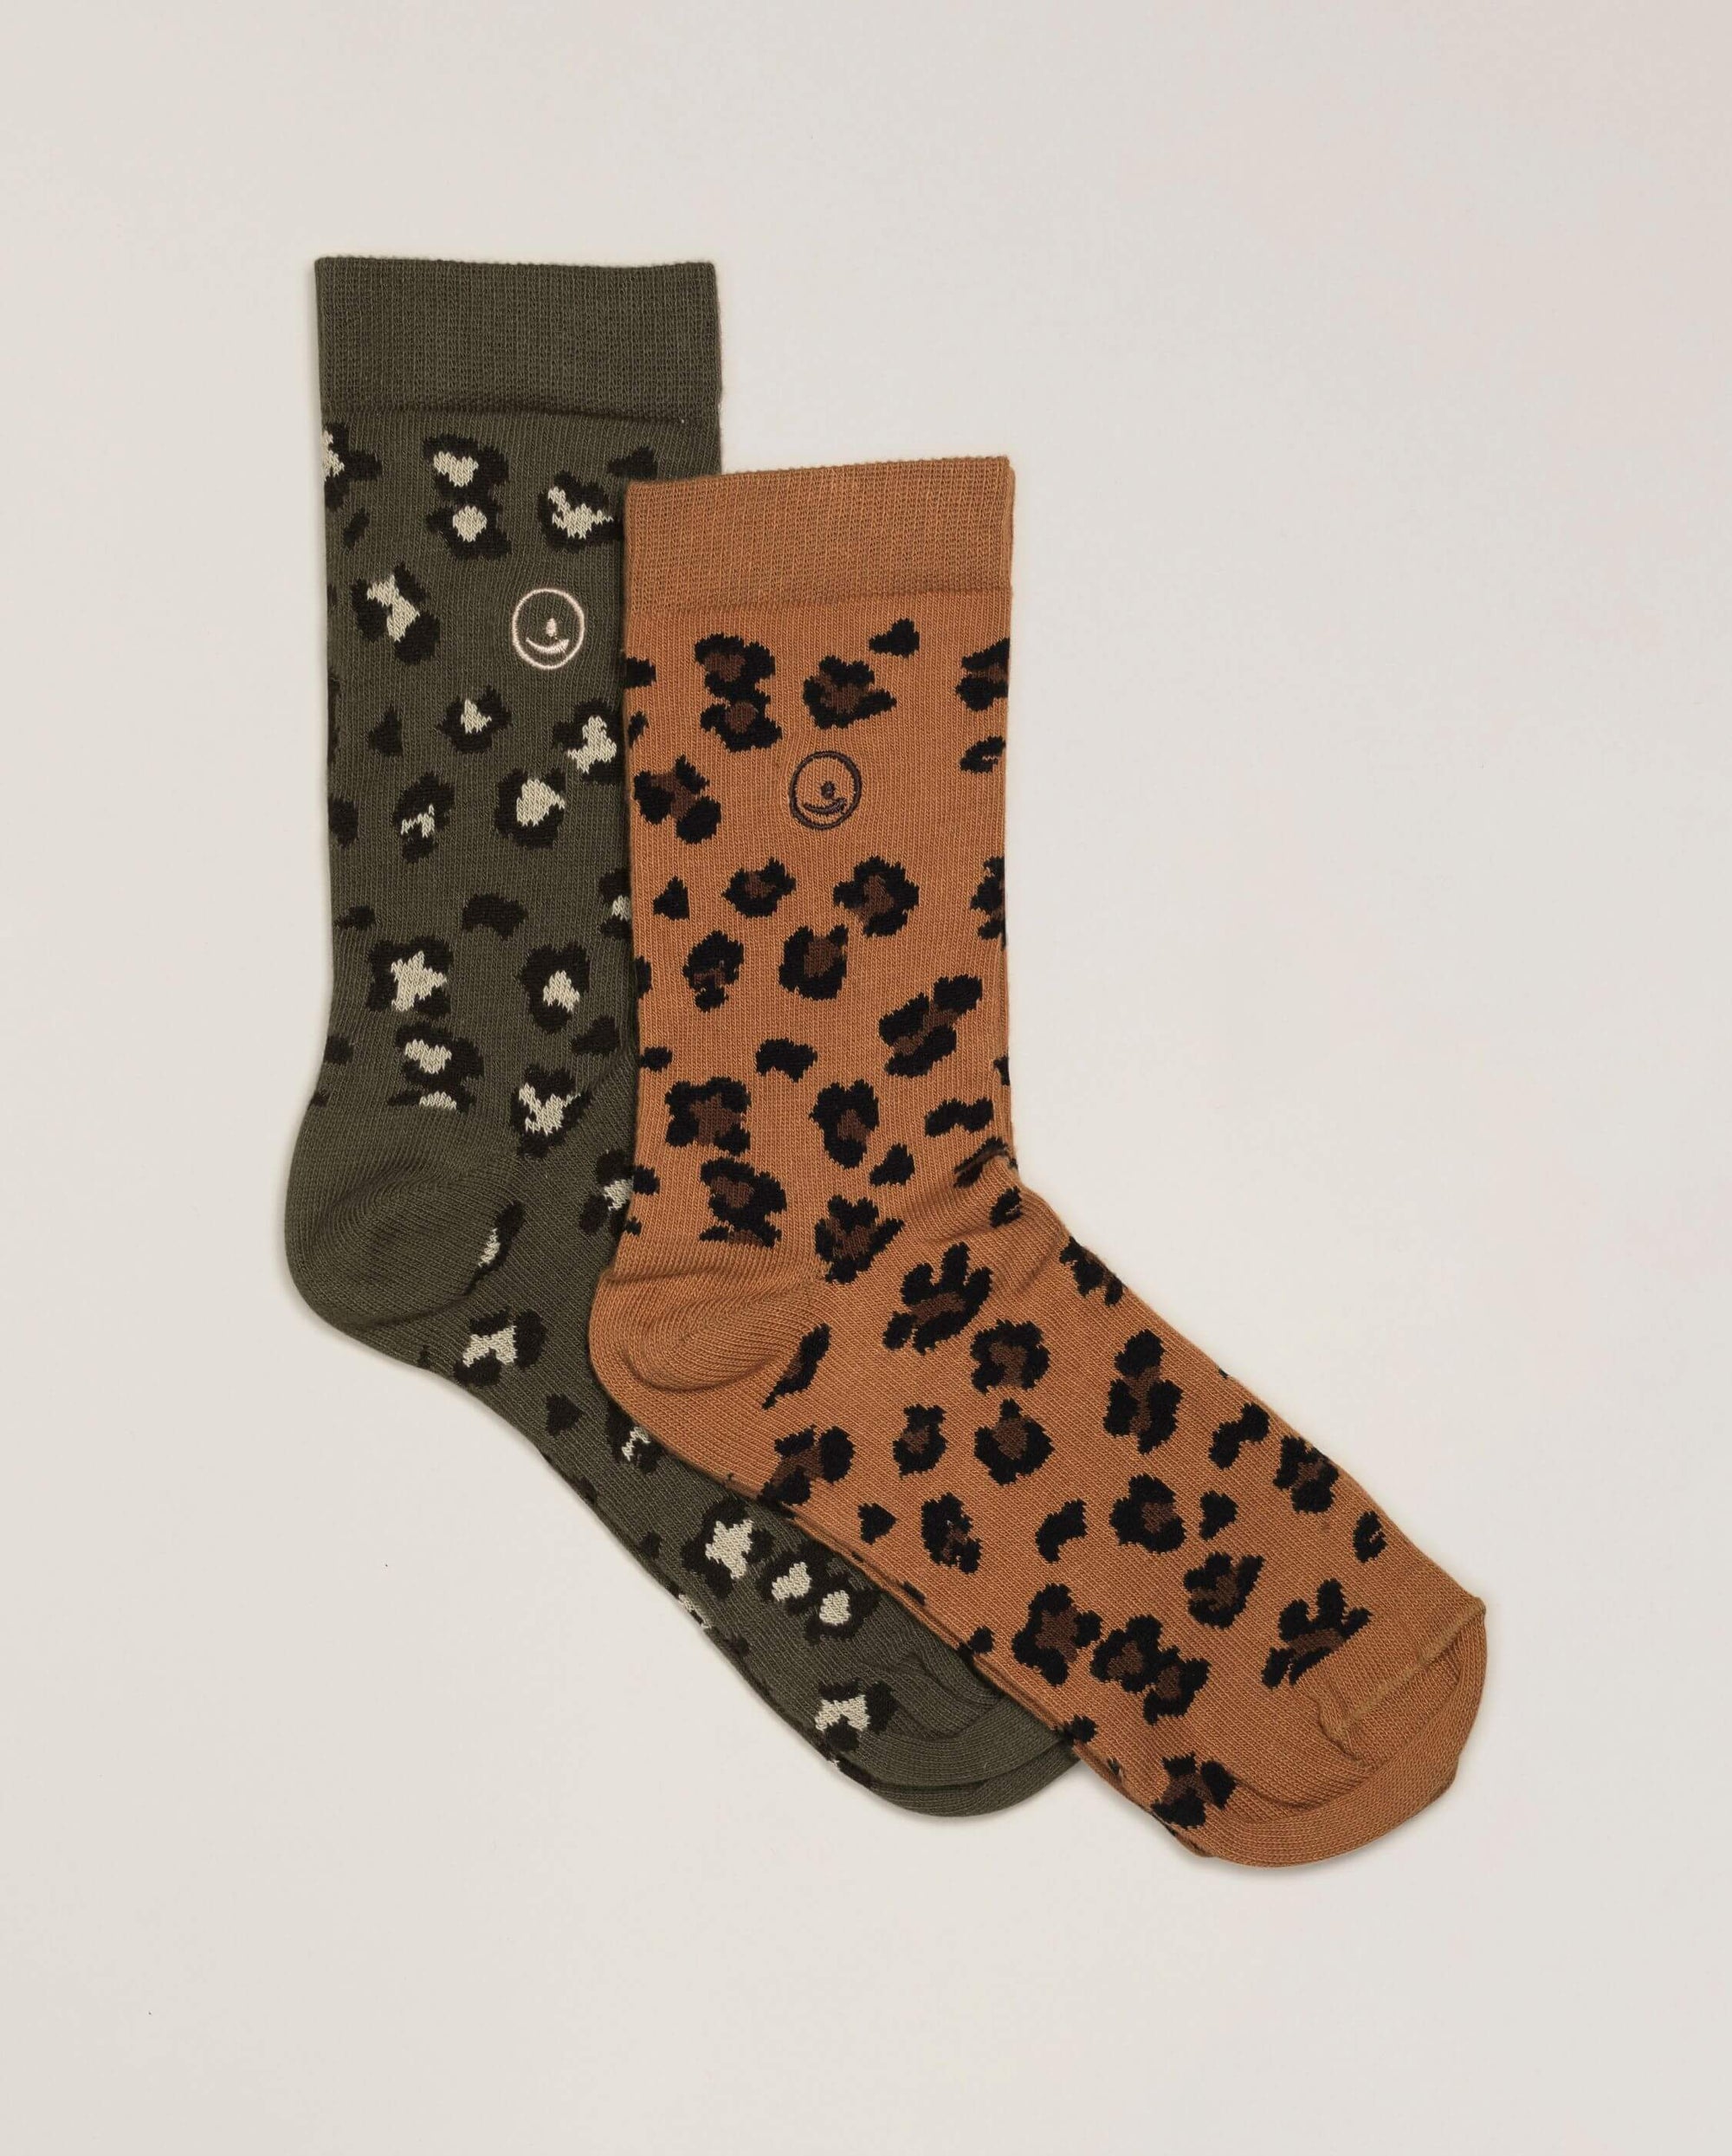 Pack 2 paires chaussettes femme léopard, camel-kaki Angarde packshot plat